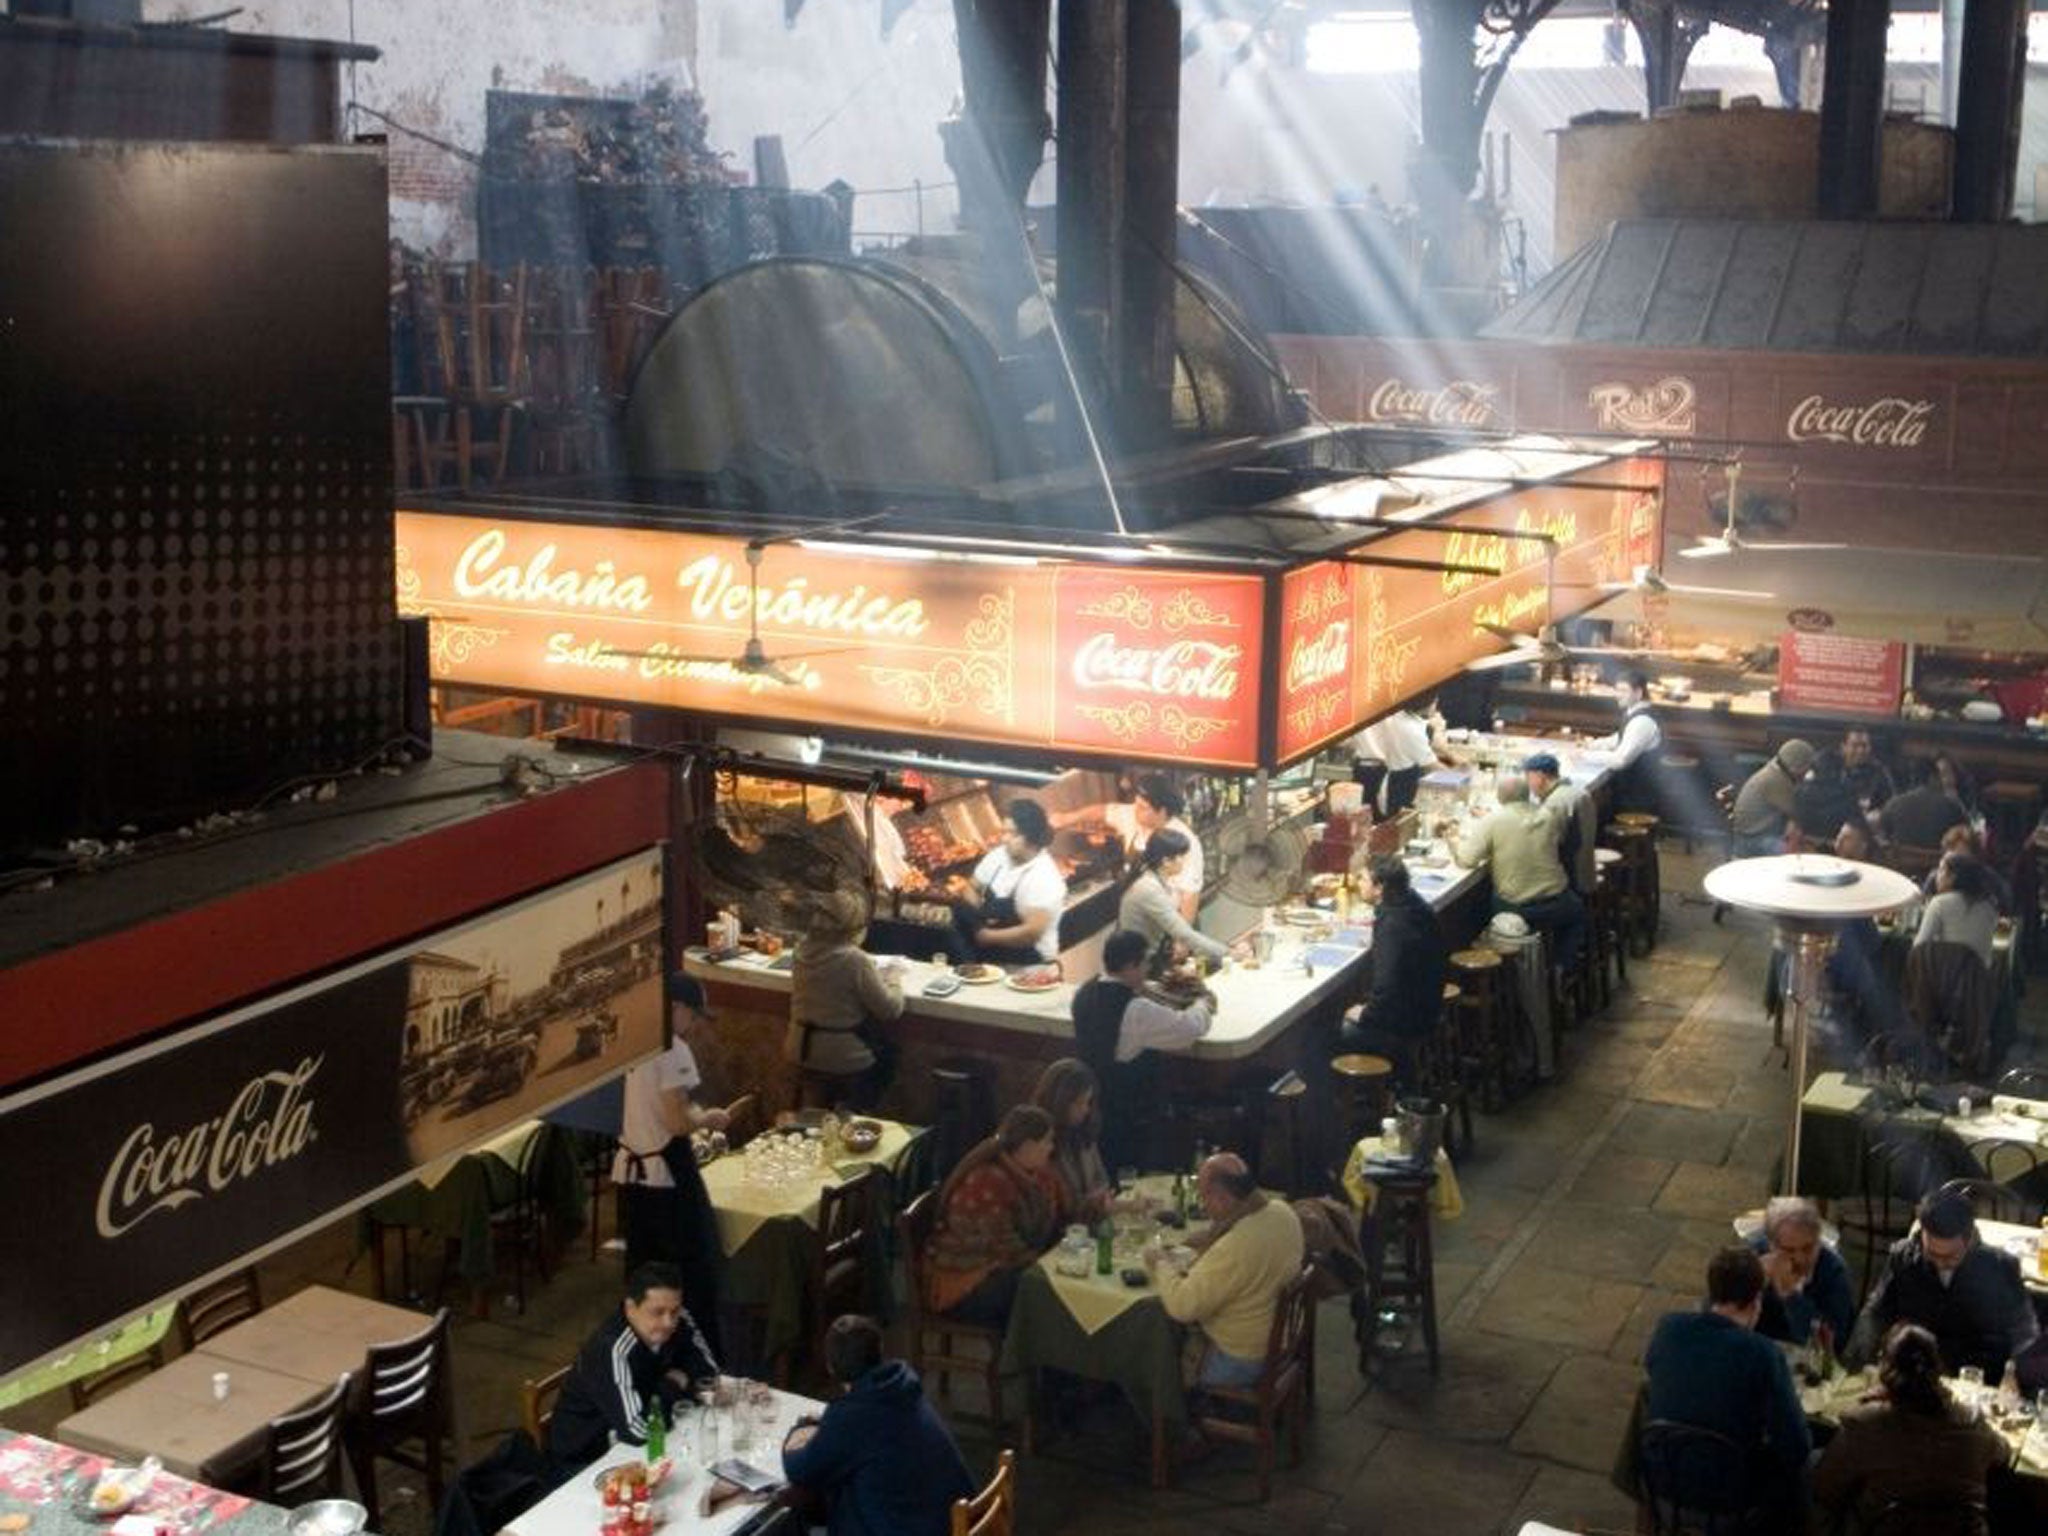 Top table: Restaurants at the Mercado del Puerto